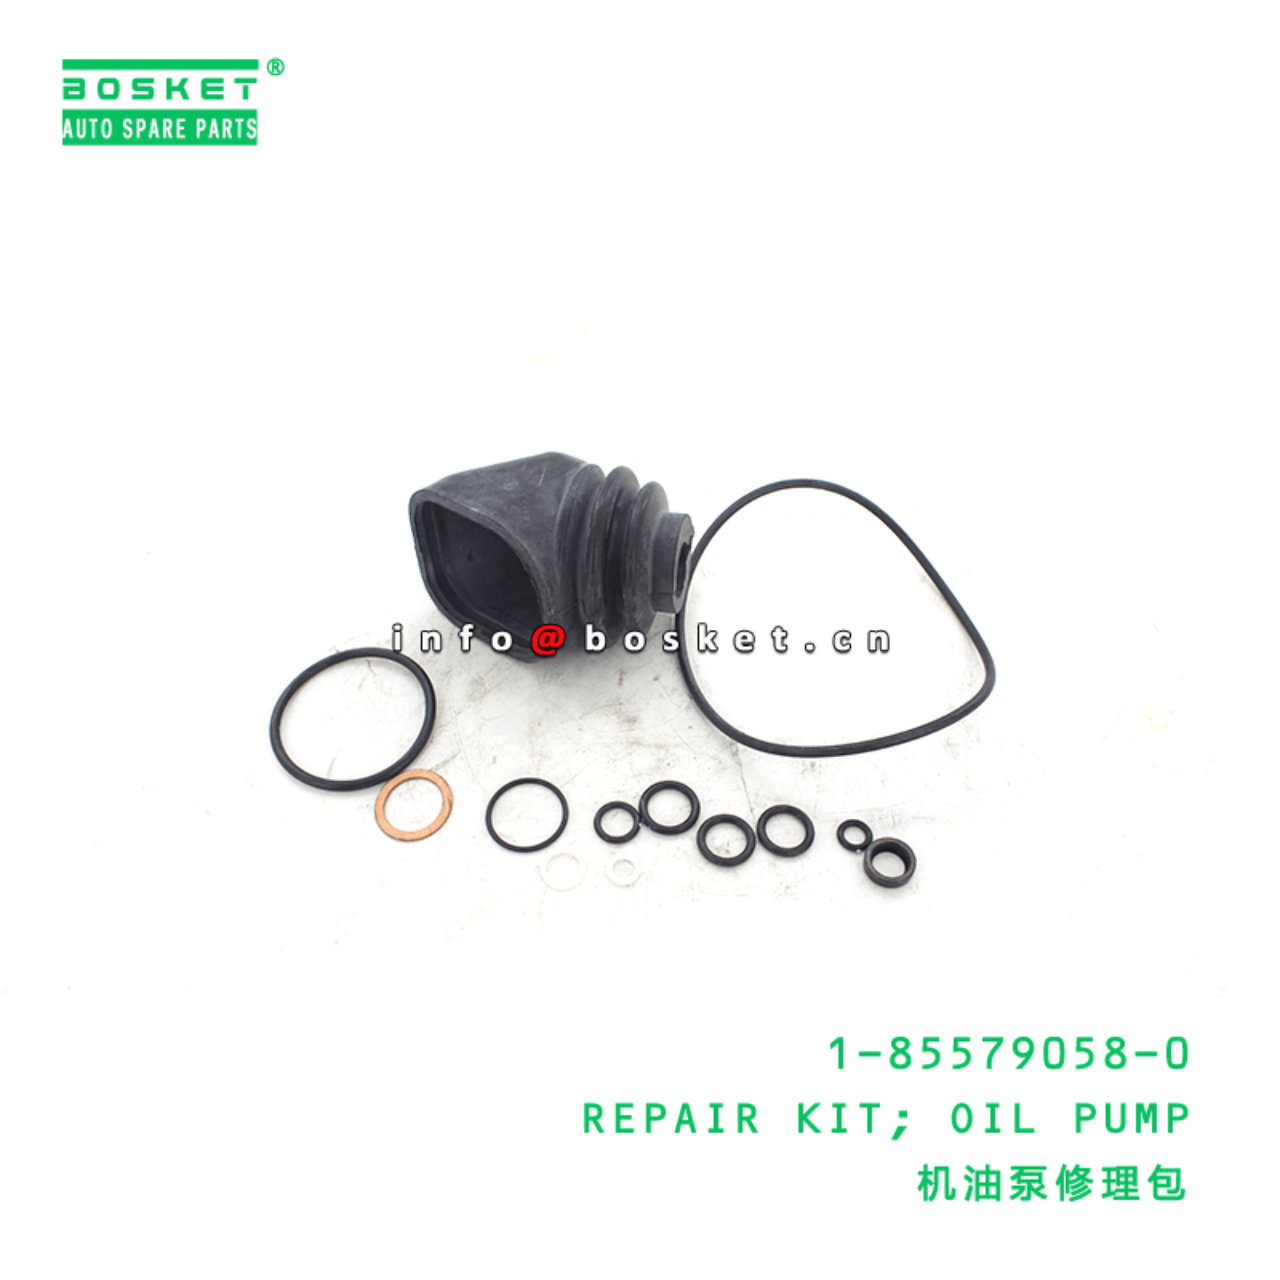  1-85579058-0 Oil Pump Repair Kit 1855790580 Suitable for ISUZU CVZ CXZ CYZ